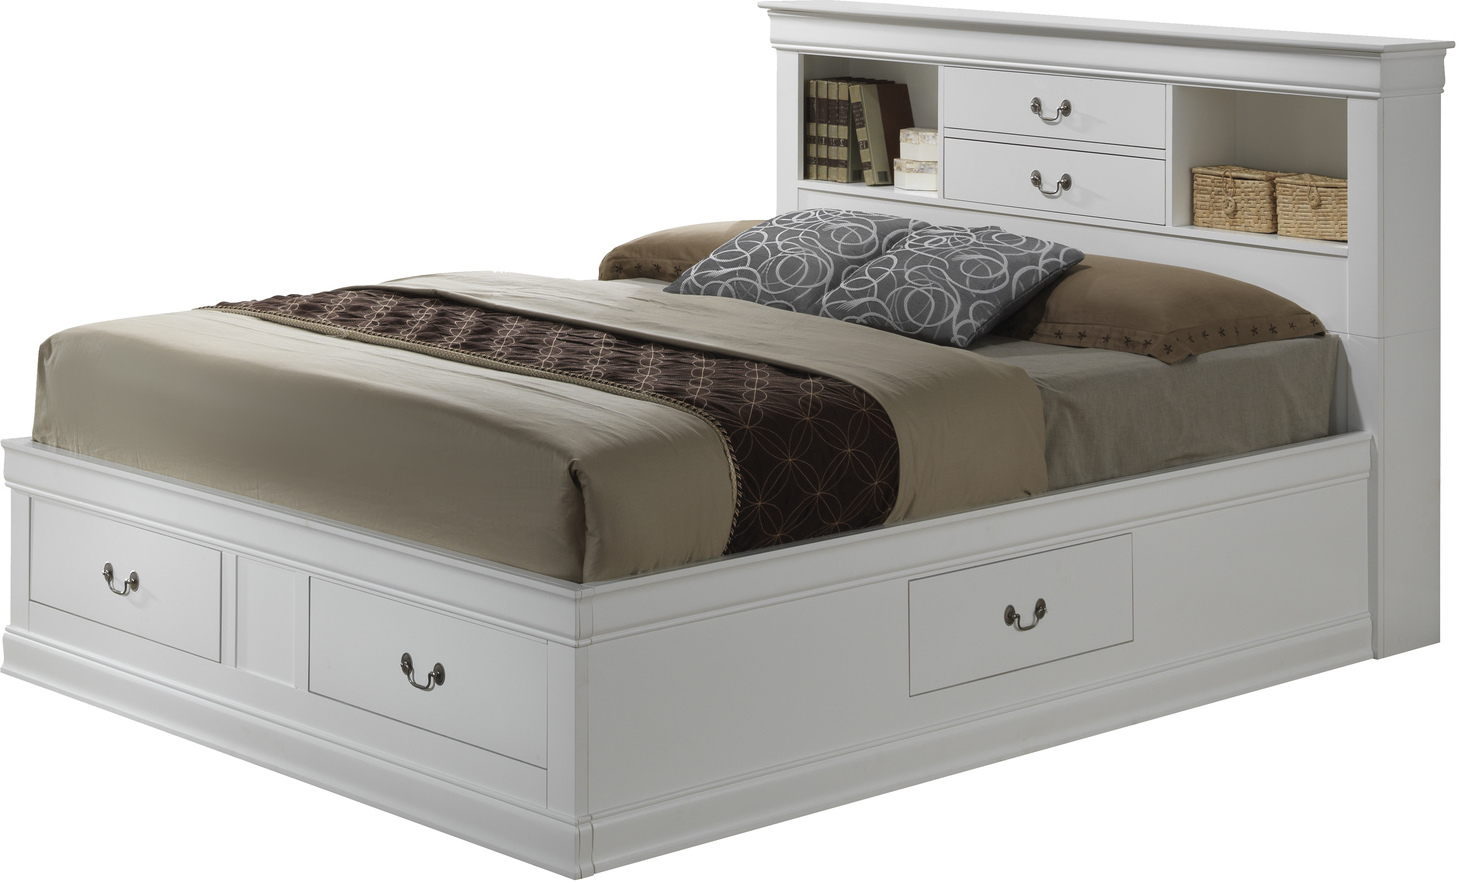 White Queen Storage Bed Glory Furniture G3190 Queen  Storage  Bed  in White  G3190B 